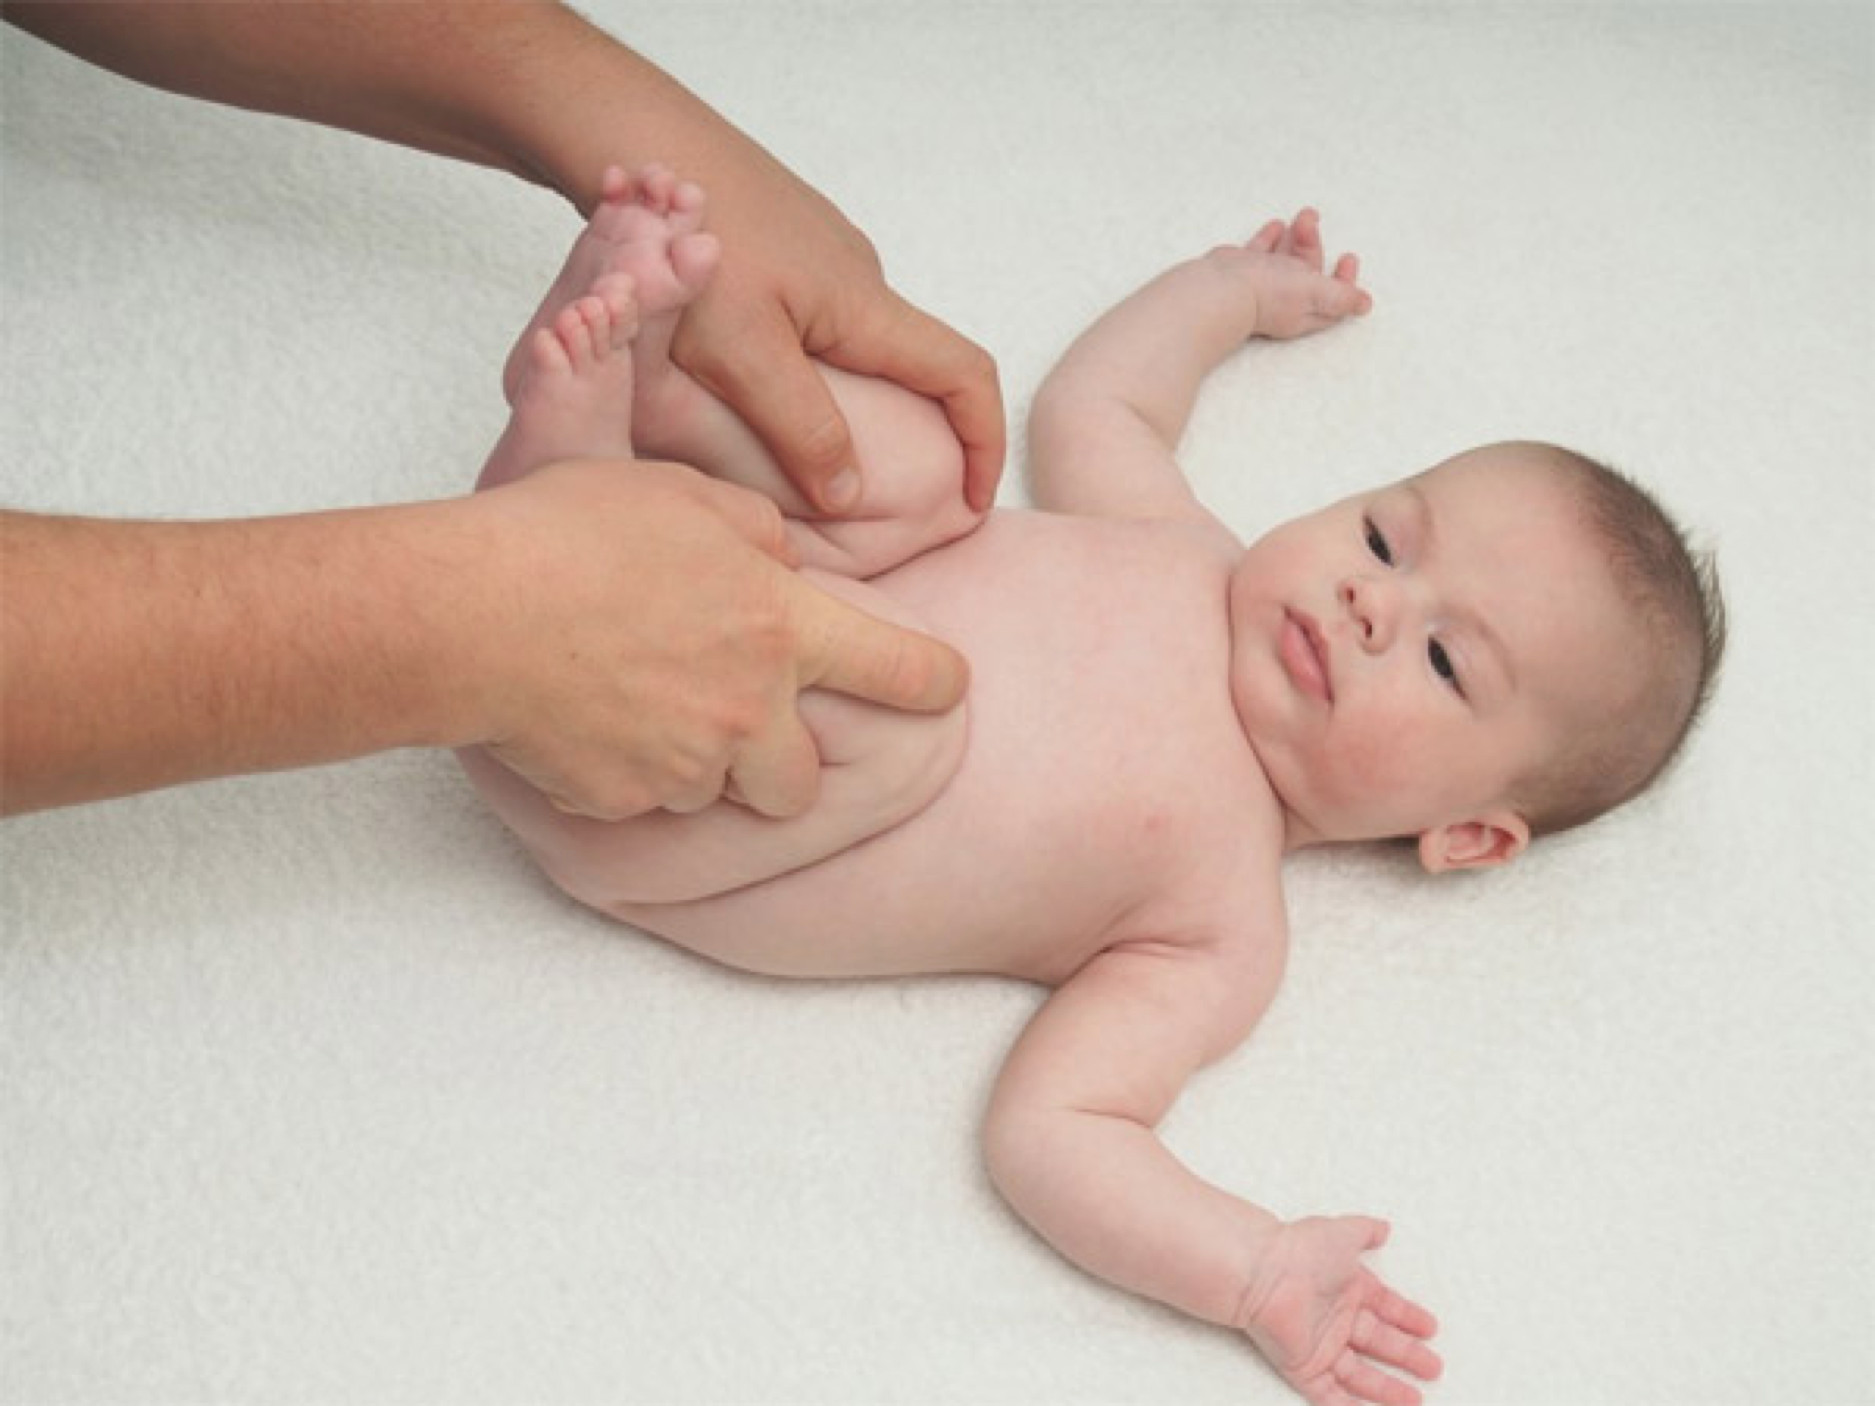 Massage chân của bé sơ sinh